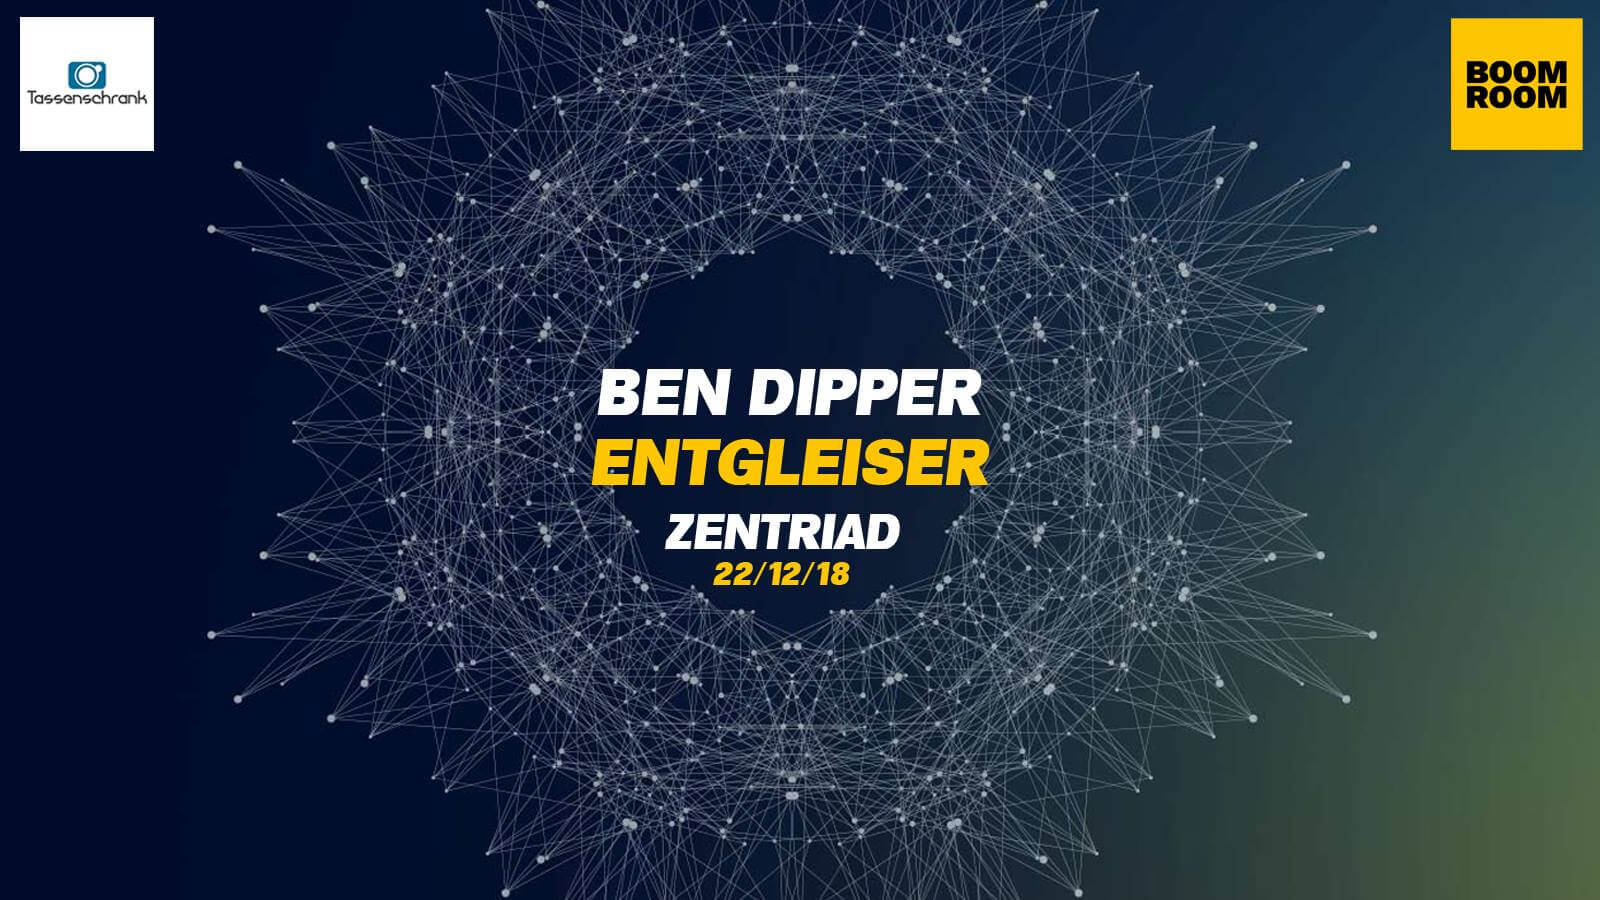 Ben Dipper and Entgleiser